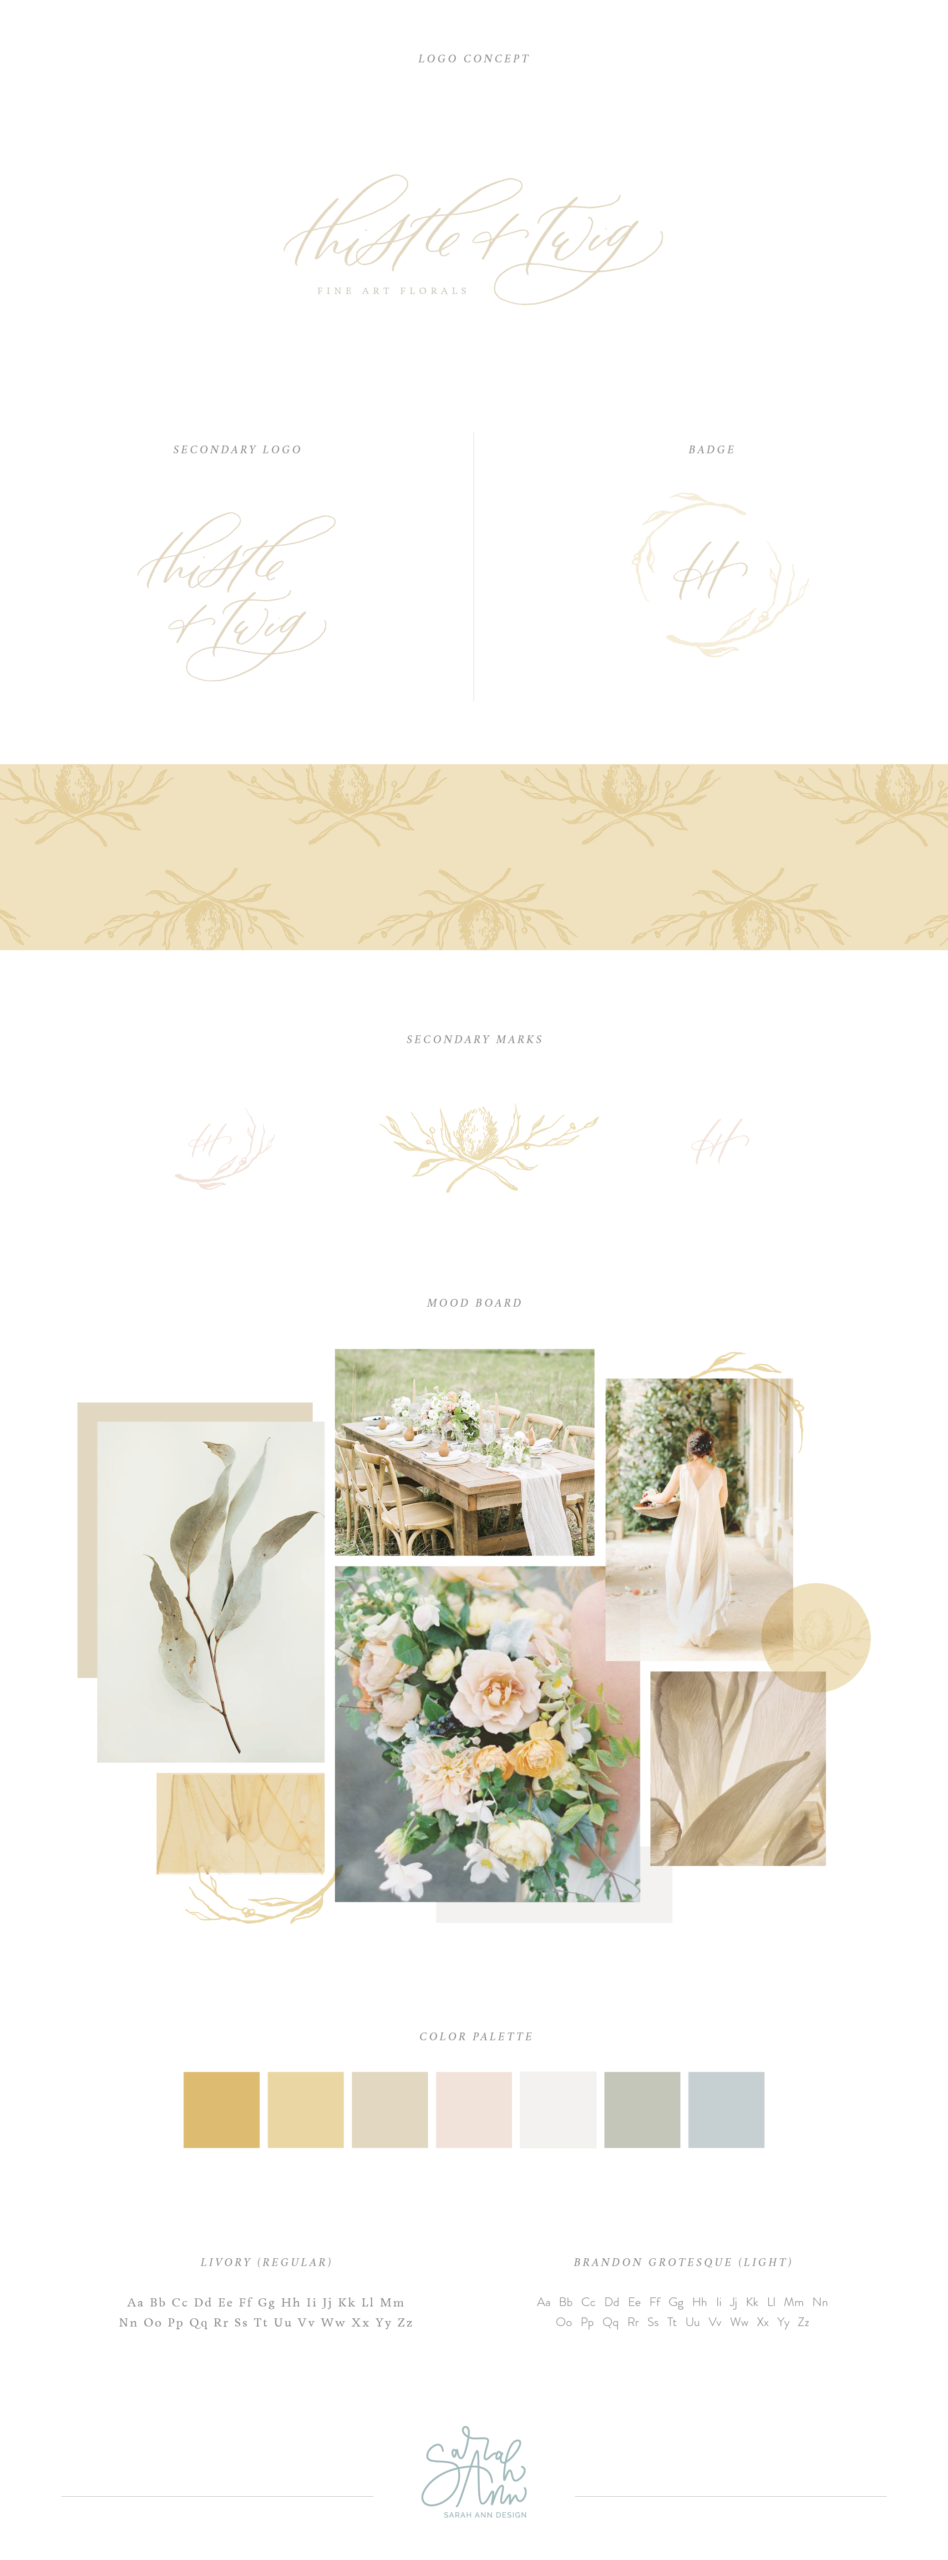 Wedding Industry Branding: Thistle + Twig // Sarah Ann Design